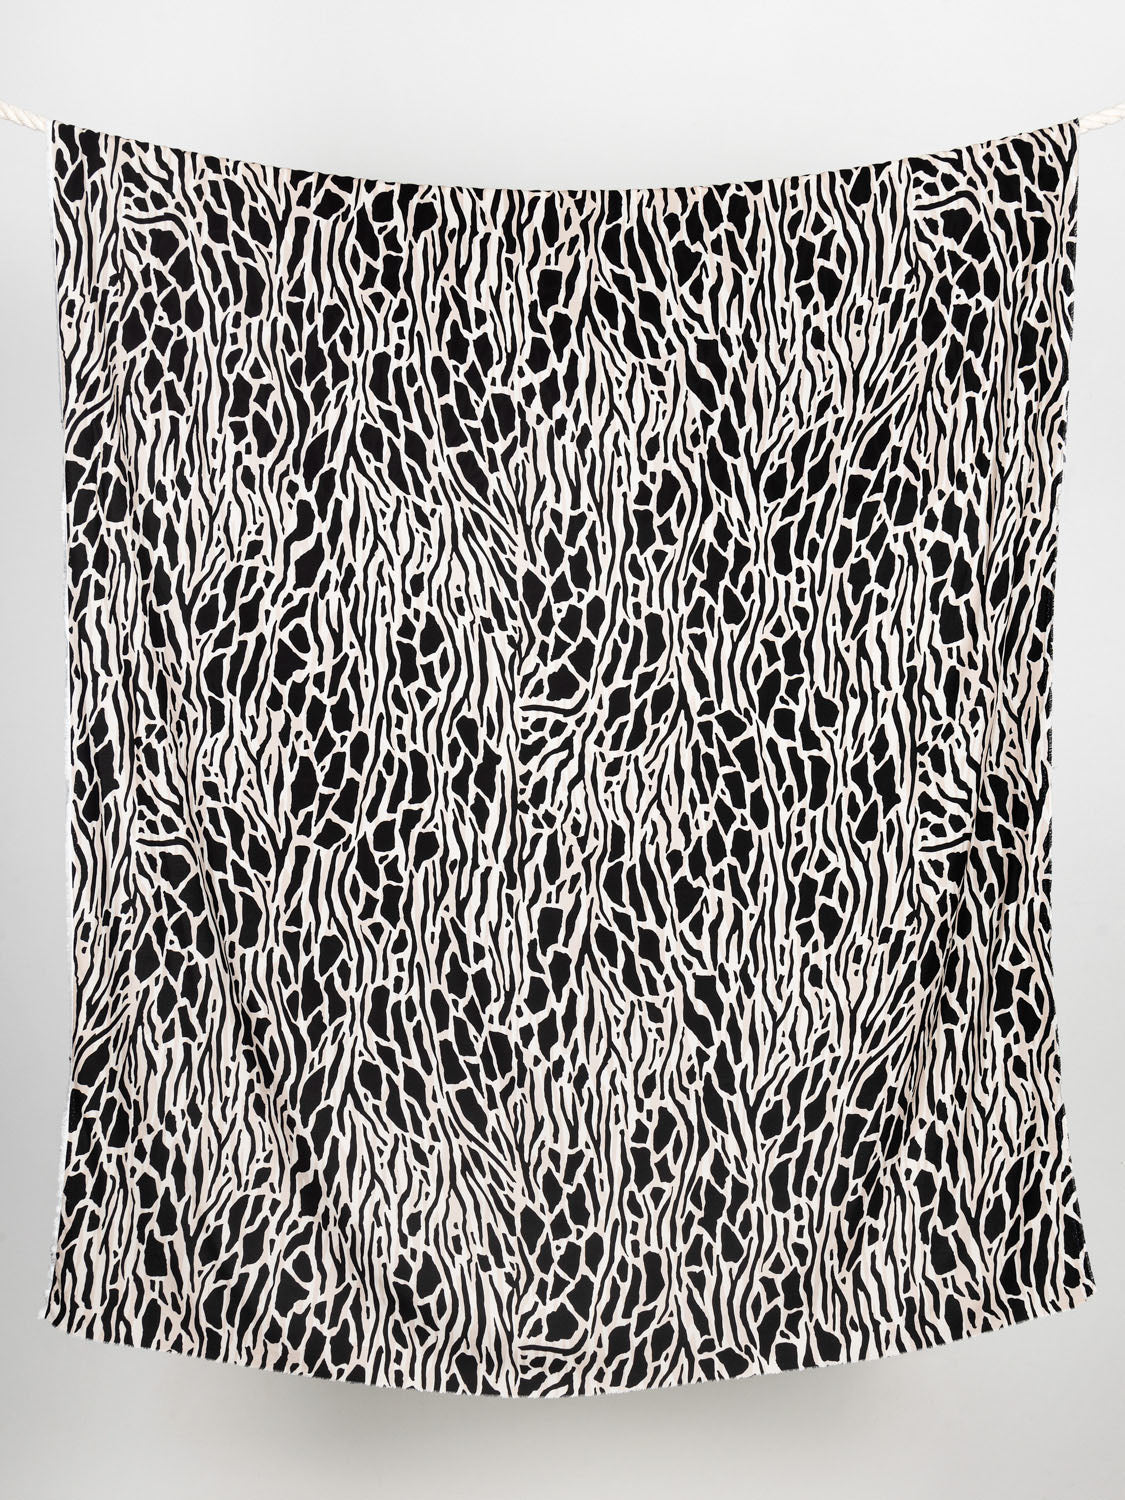 Zebra animal print fabric in black and grey . Linen & Cotton blend